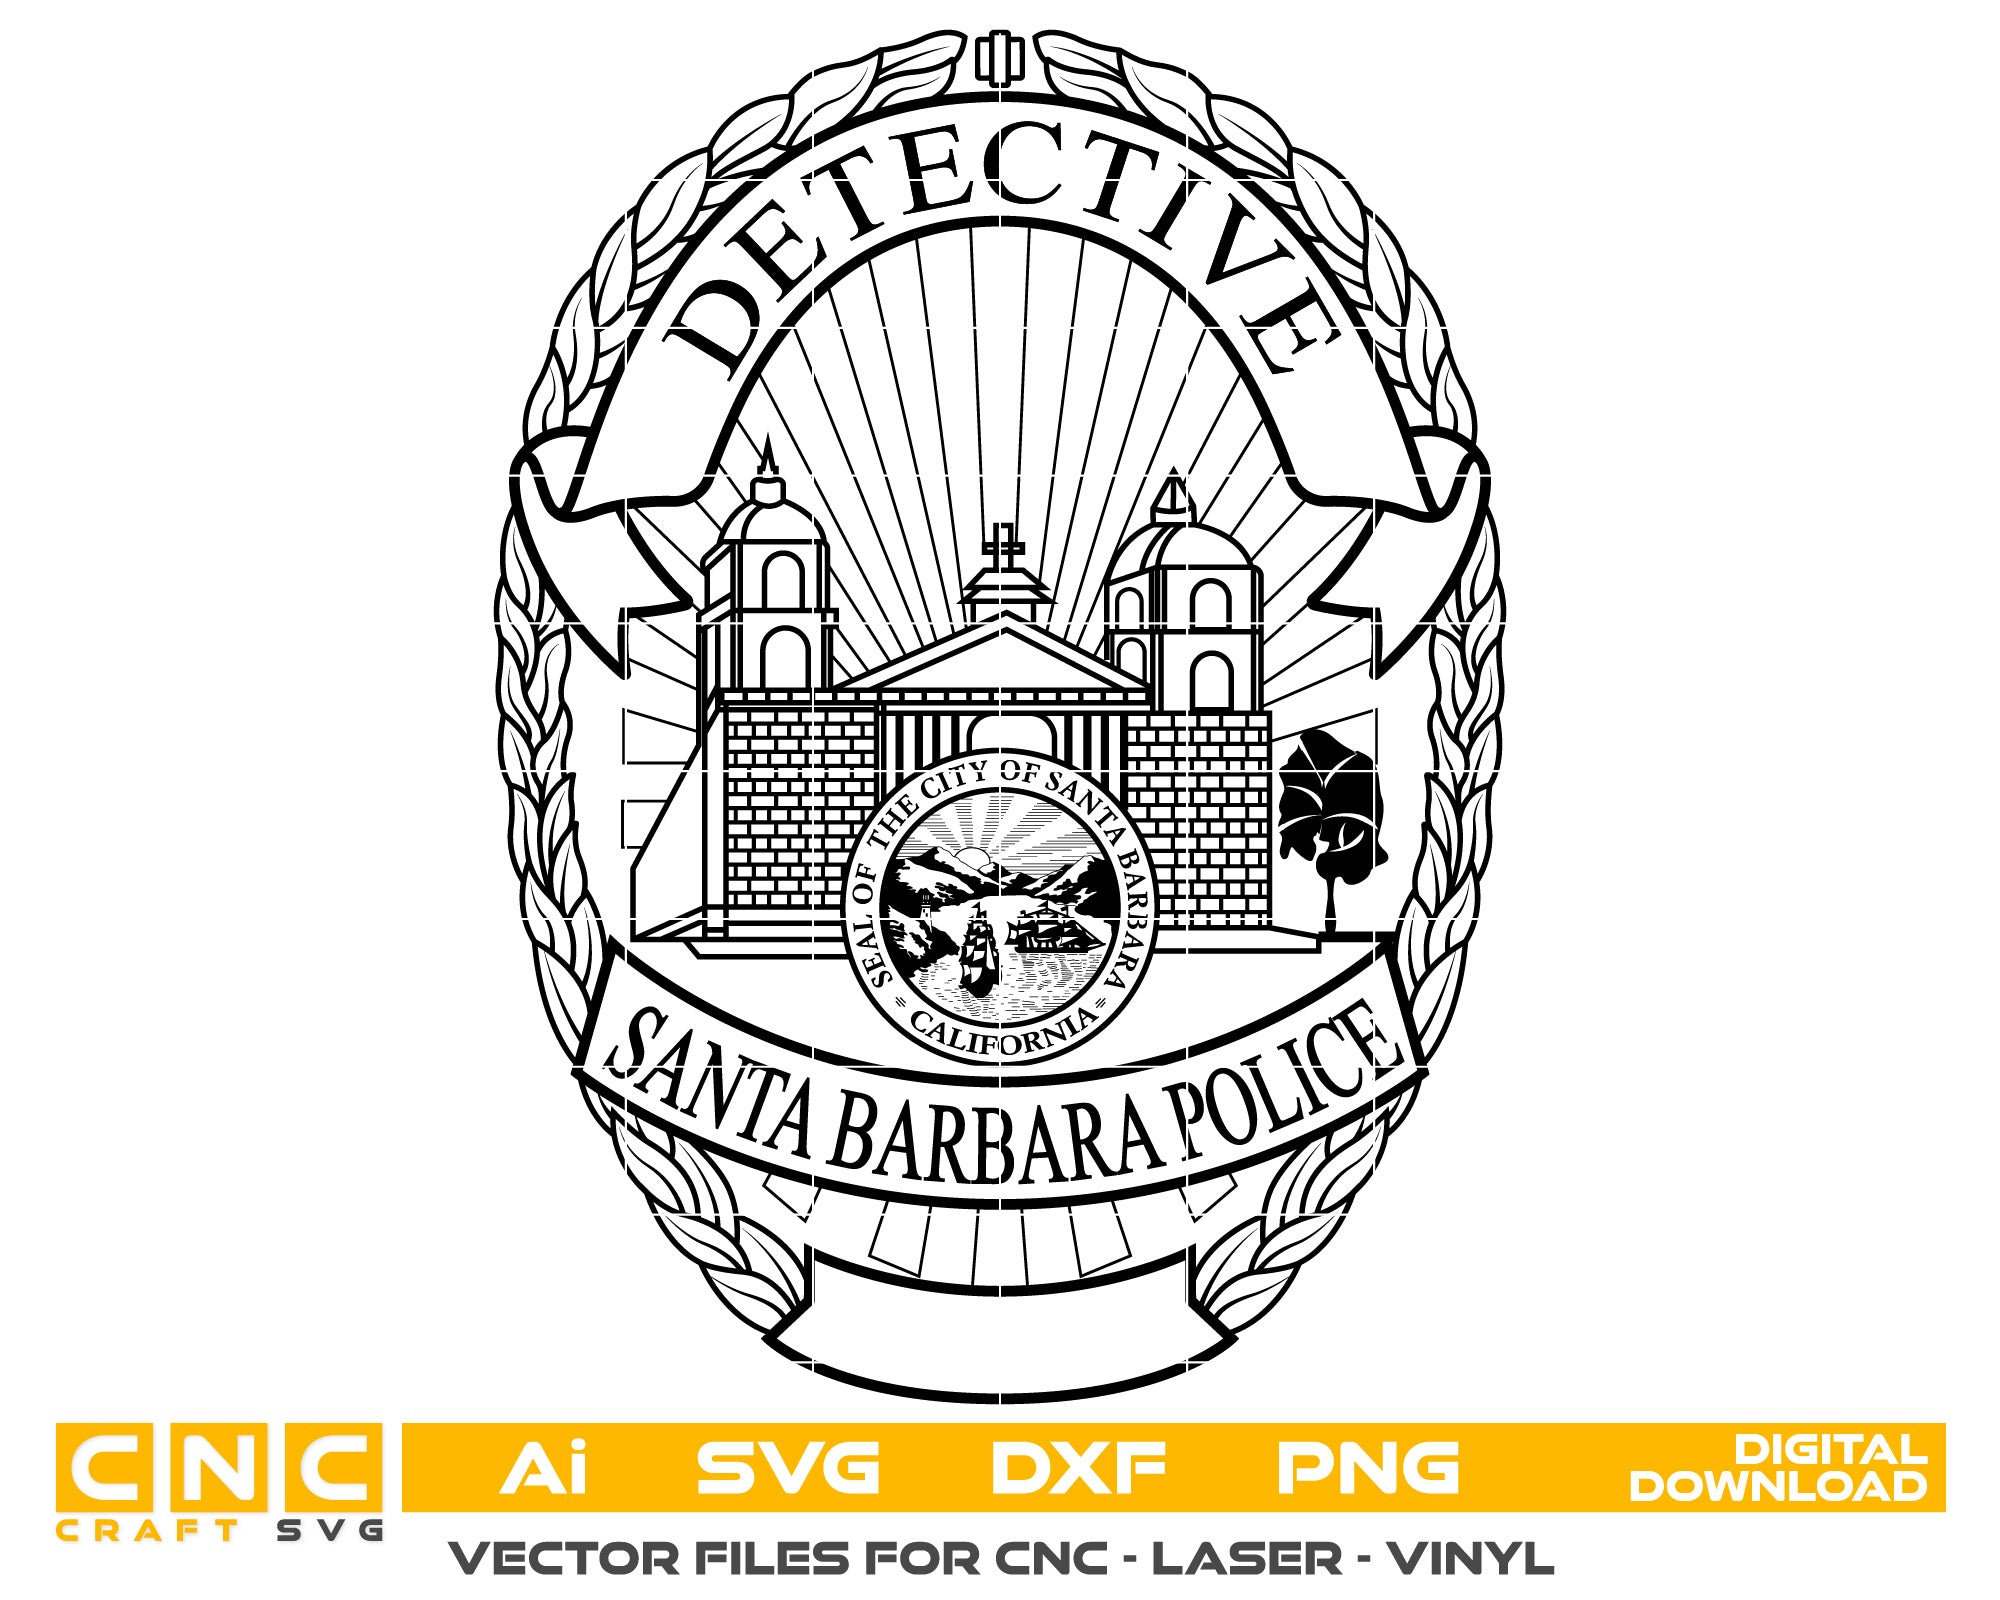 Santa Barbara Police Detective Badge vector art